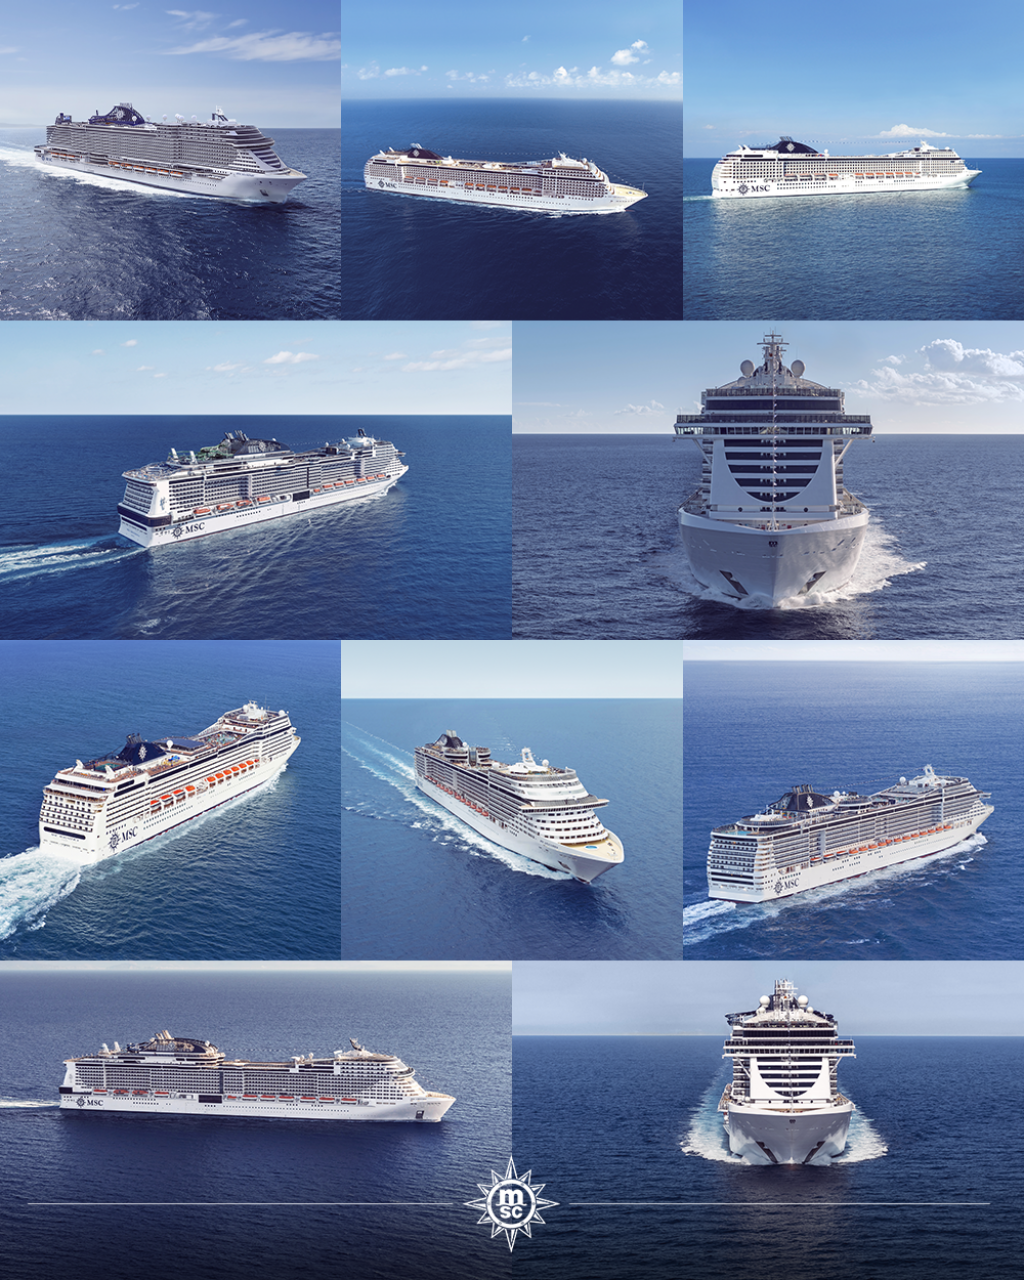 &lt;br /&gt;
&lt;br /&gt;
Tri broda na istočnom Mediteranu&lt;br /&gt;
MSC Cruises u nadolazećoj ljetnoj sezoni